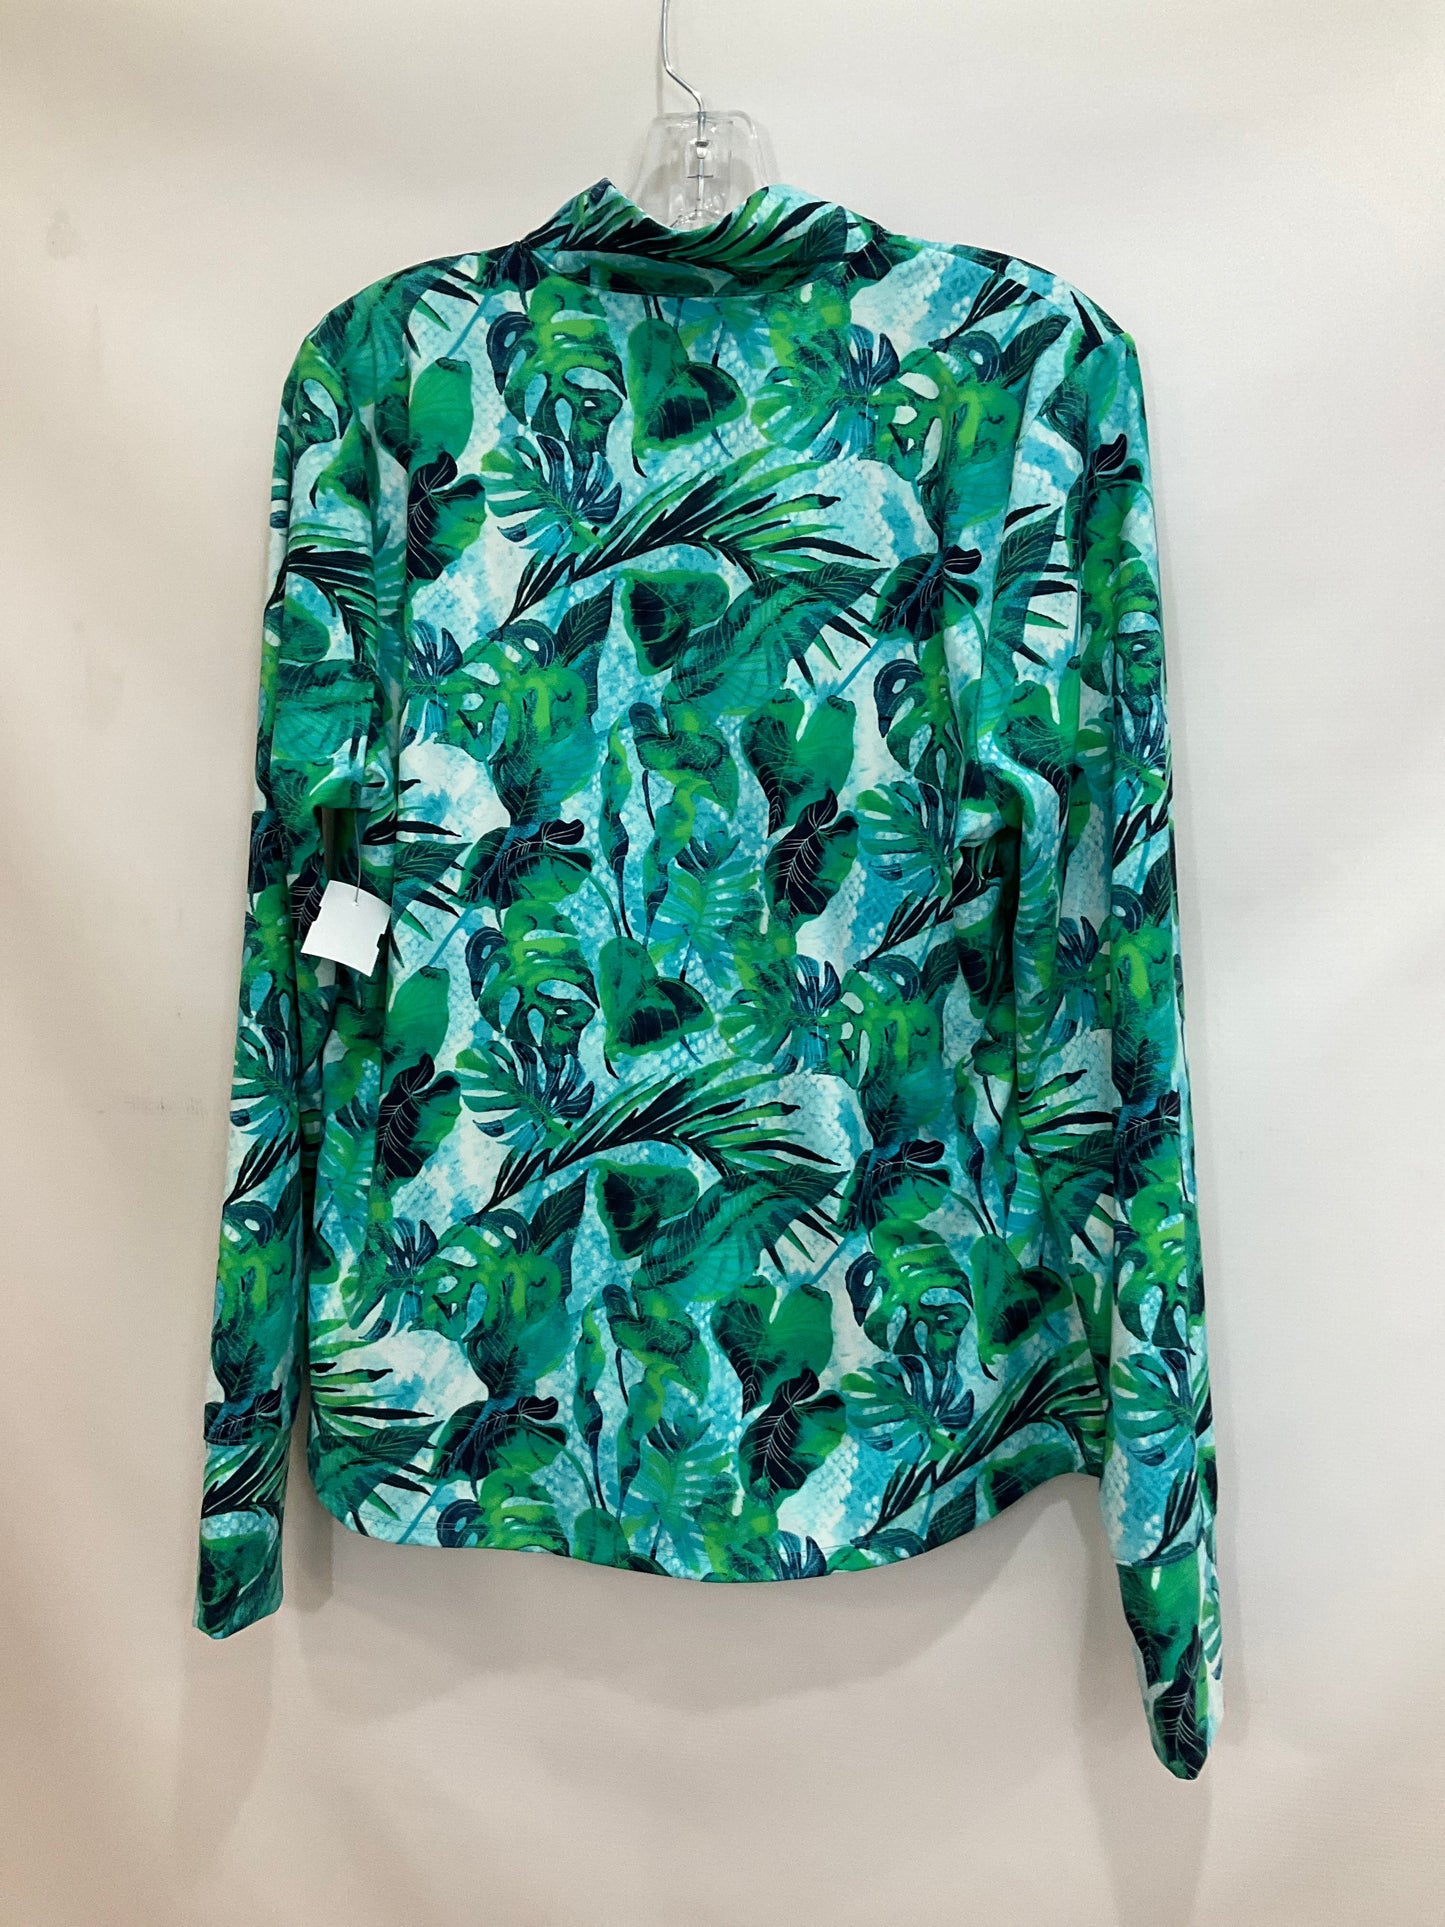 Tropical Print Athletic Jacket Tommy Bahama, Size Xl